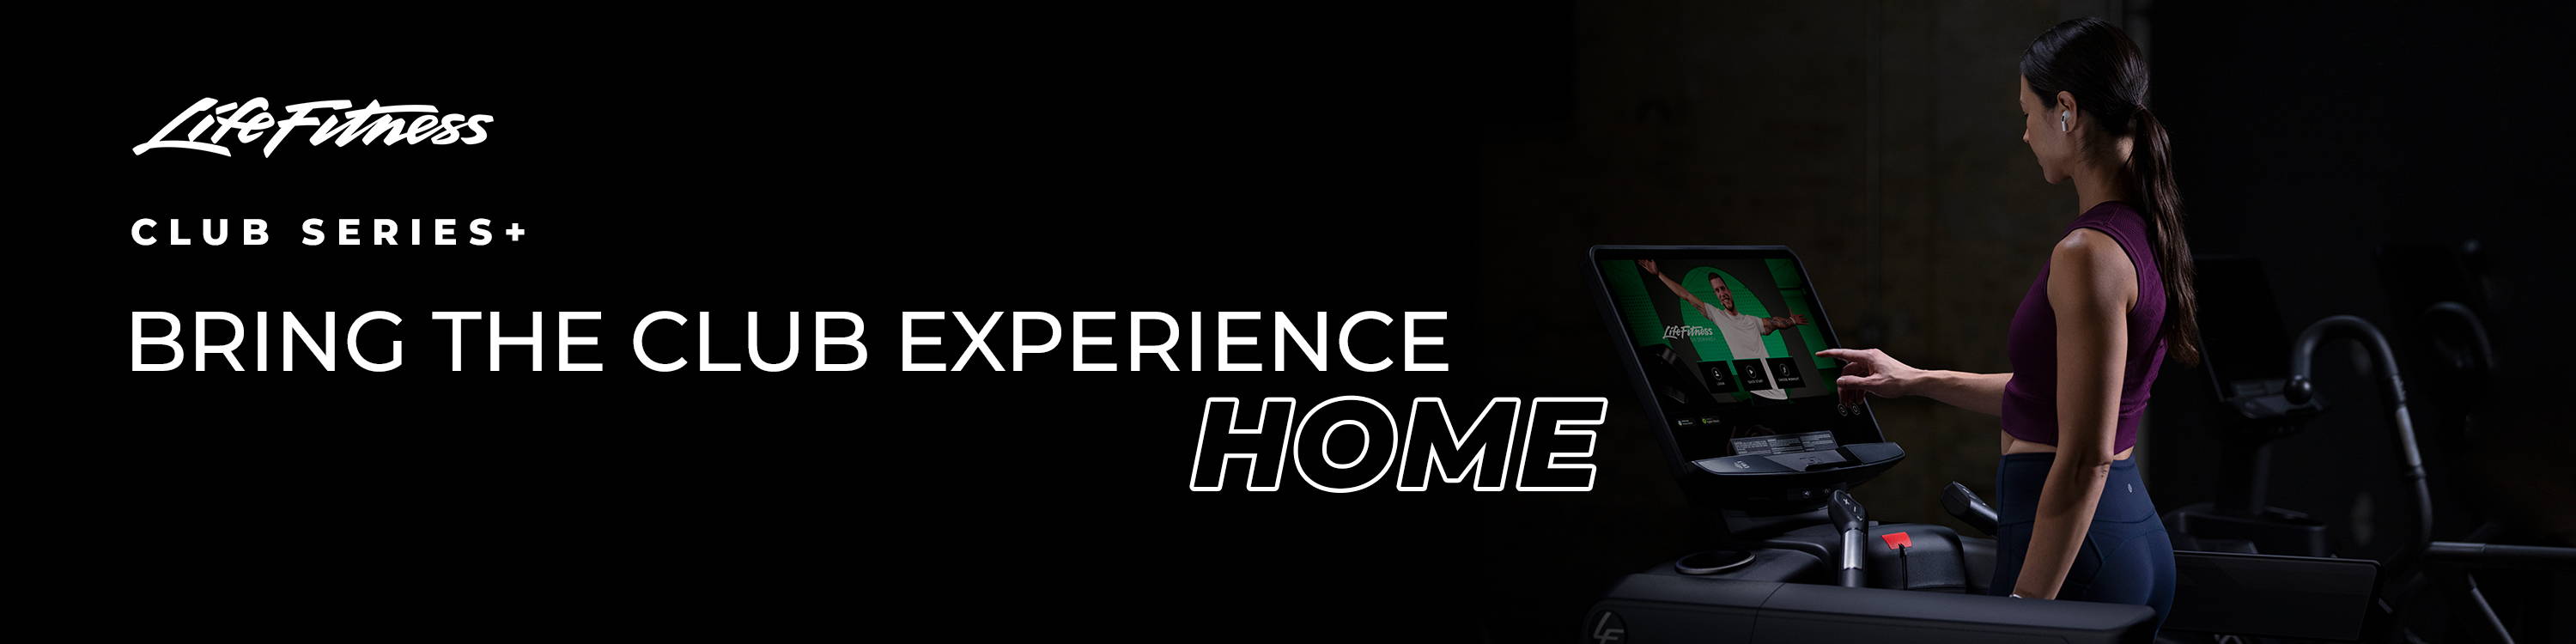 Bring the club experience home: Platinum Club | Club Series+